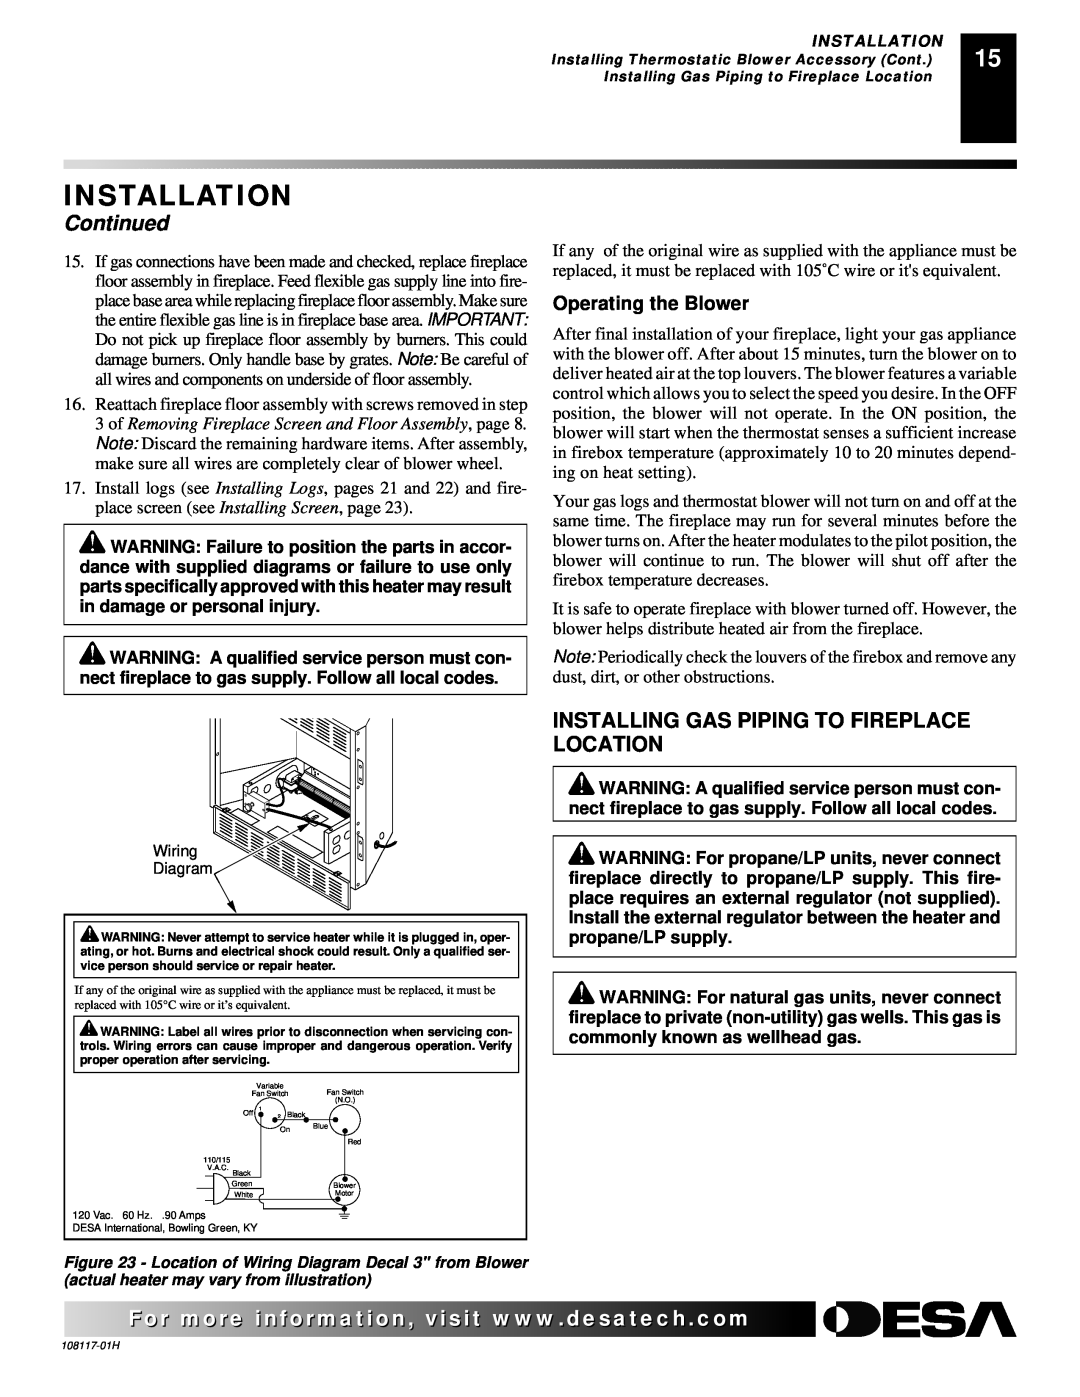 Desa EFP33PR, EFP33NR installation manual Installing Gas Piping To Fireplace Location, Installation, Continued 